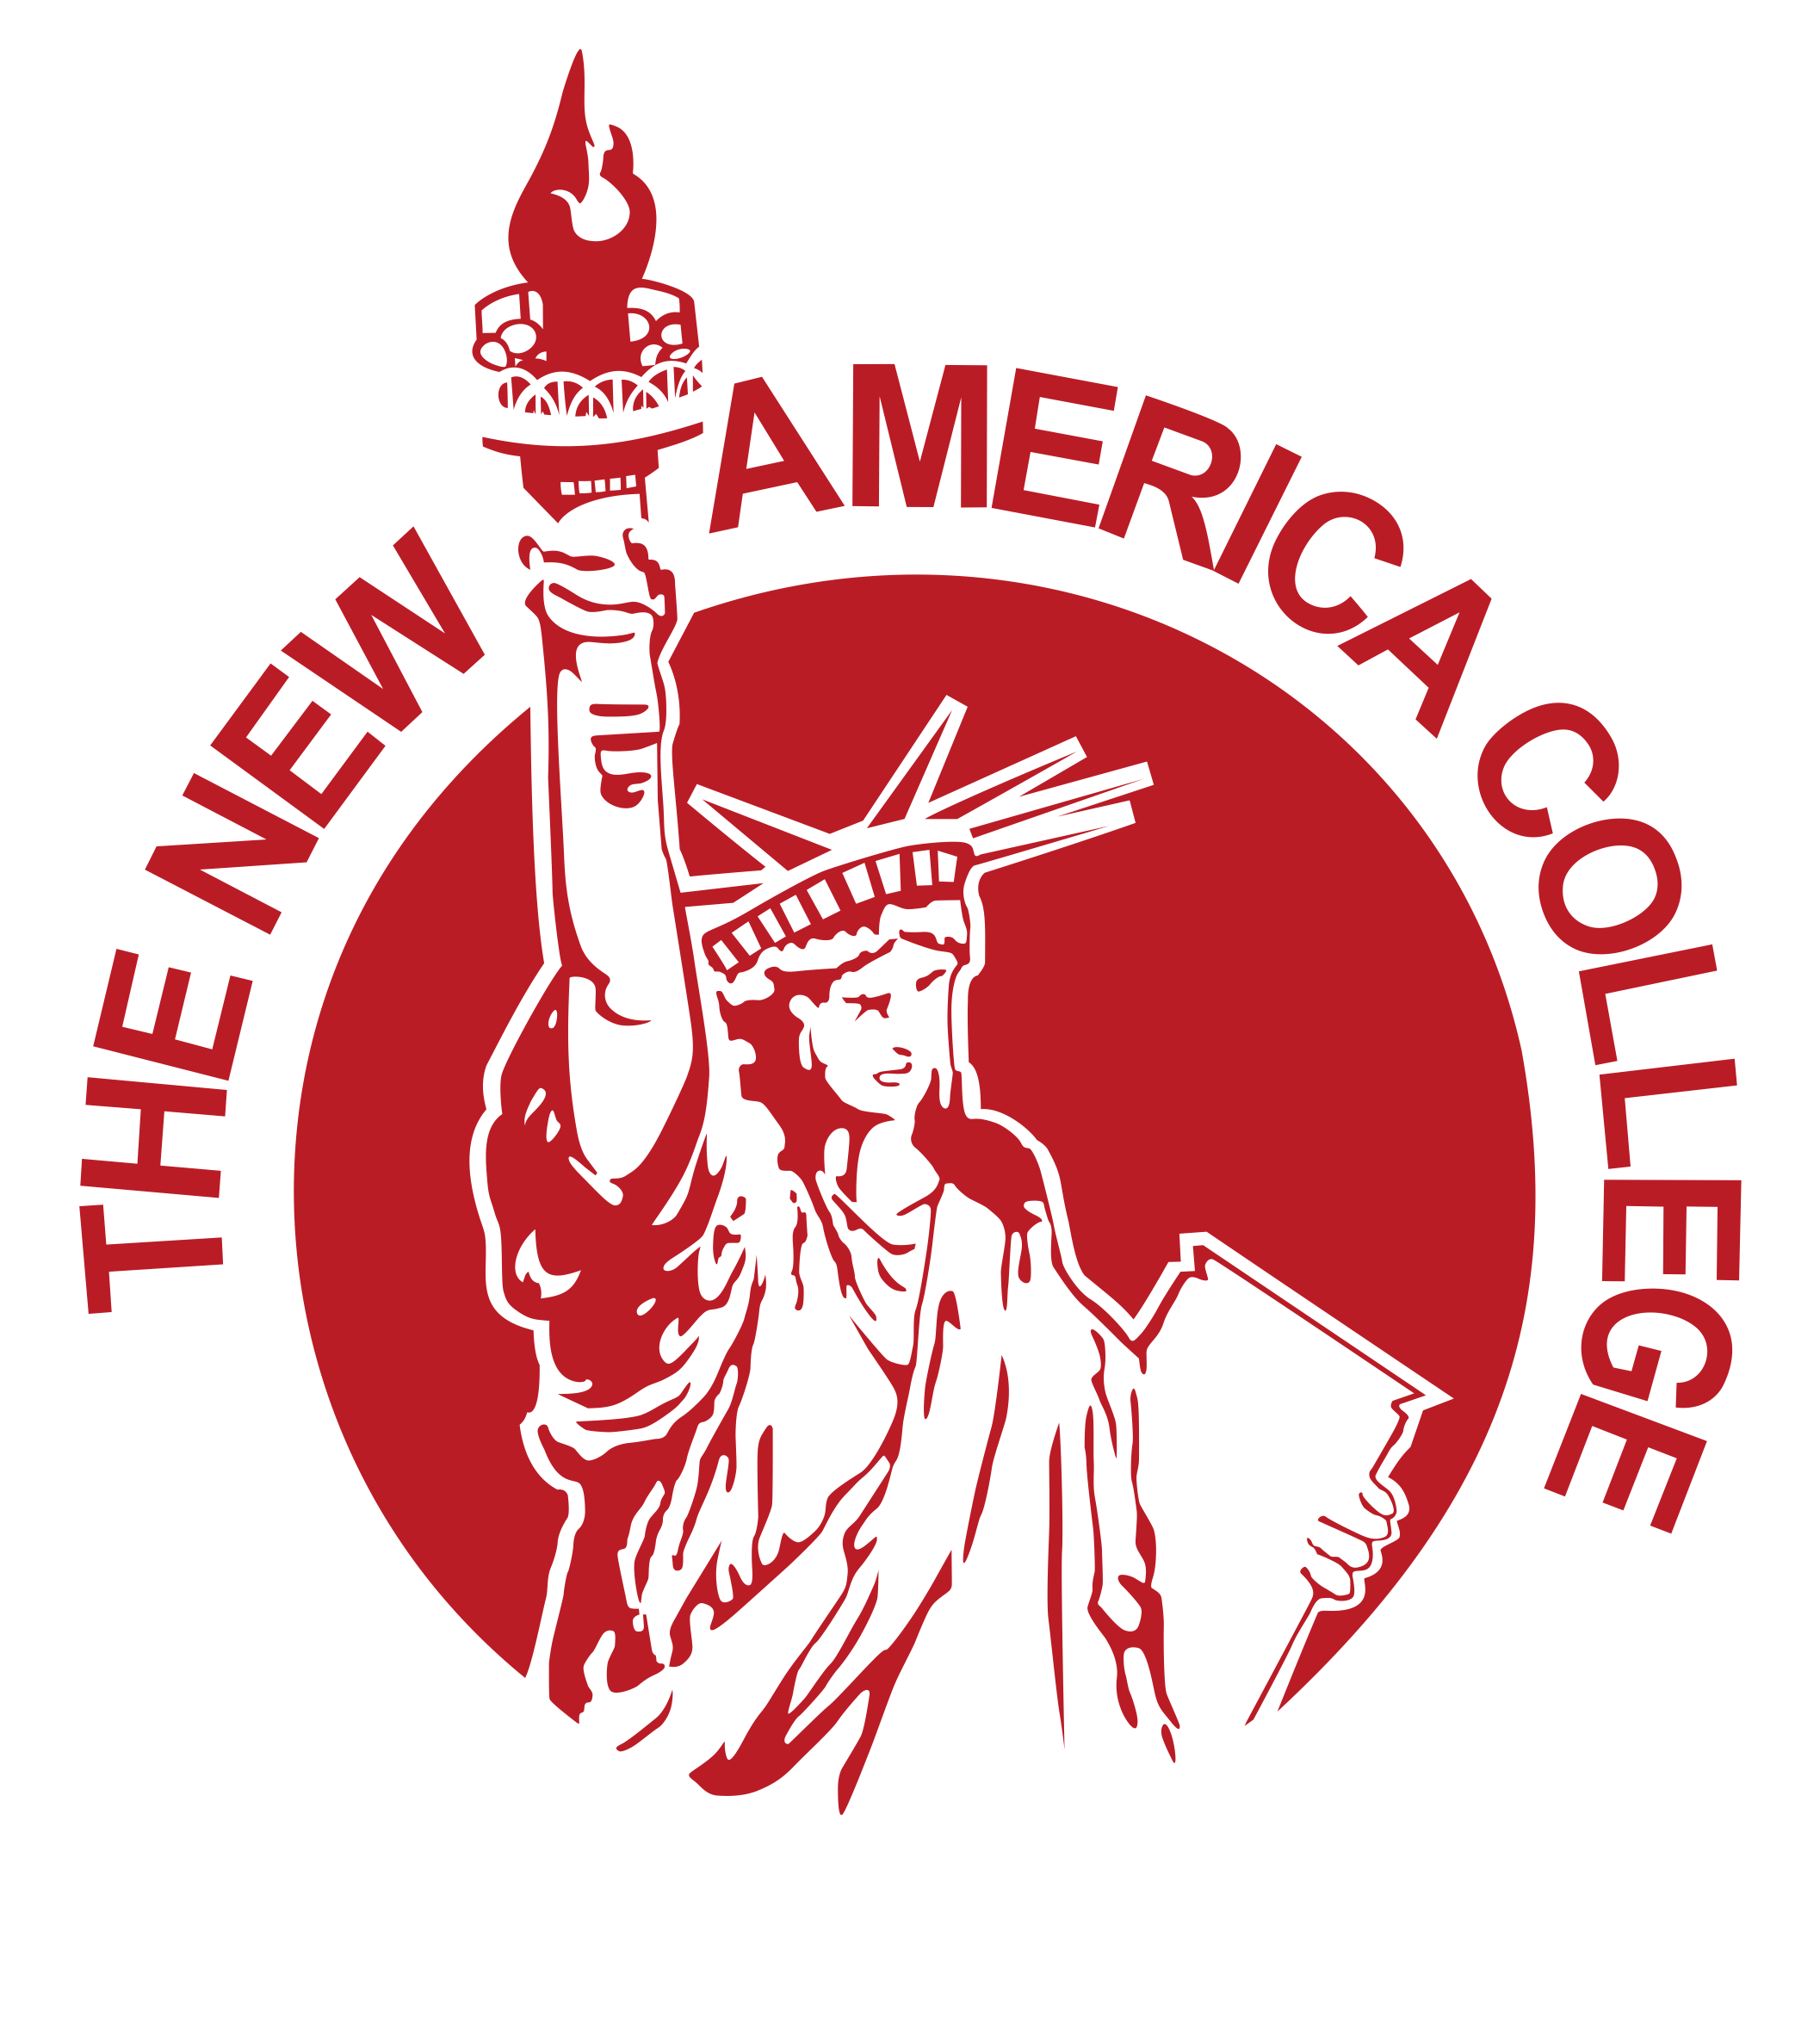 The New America College logo